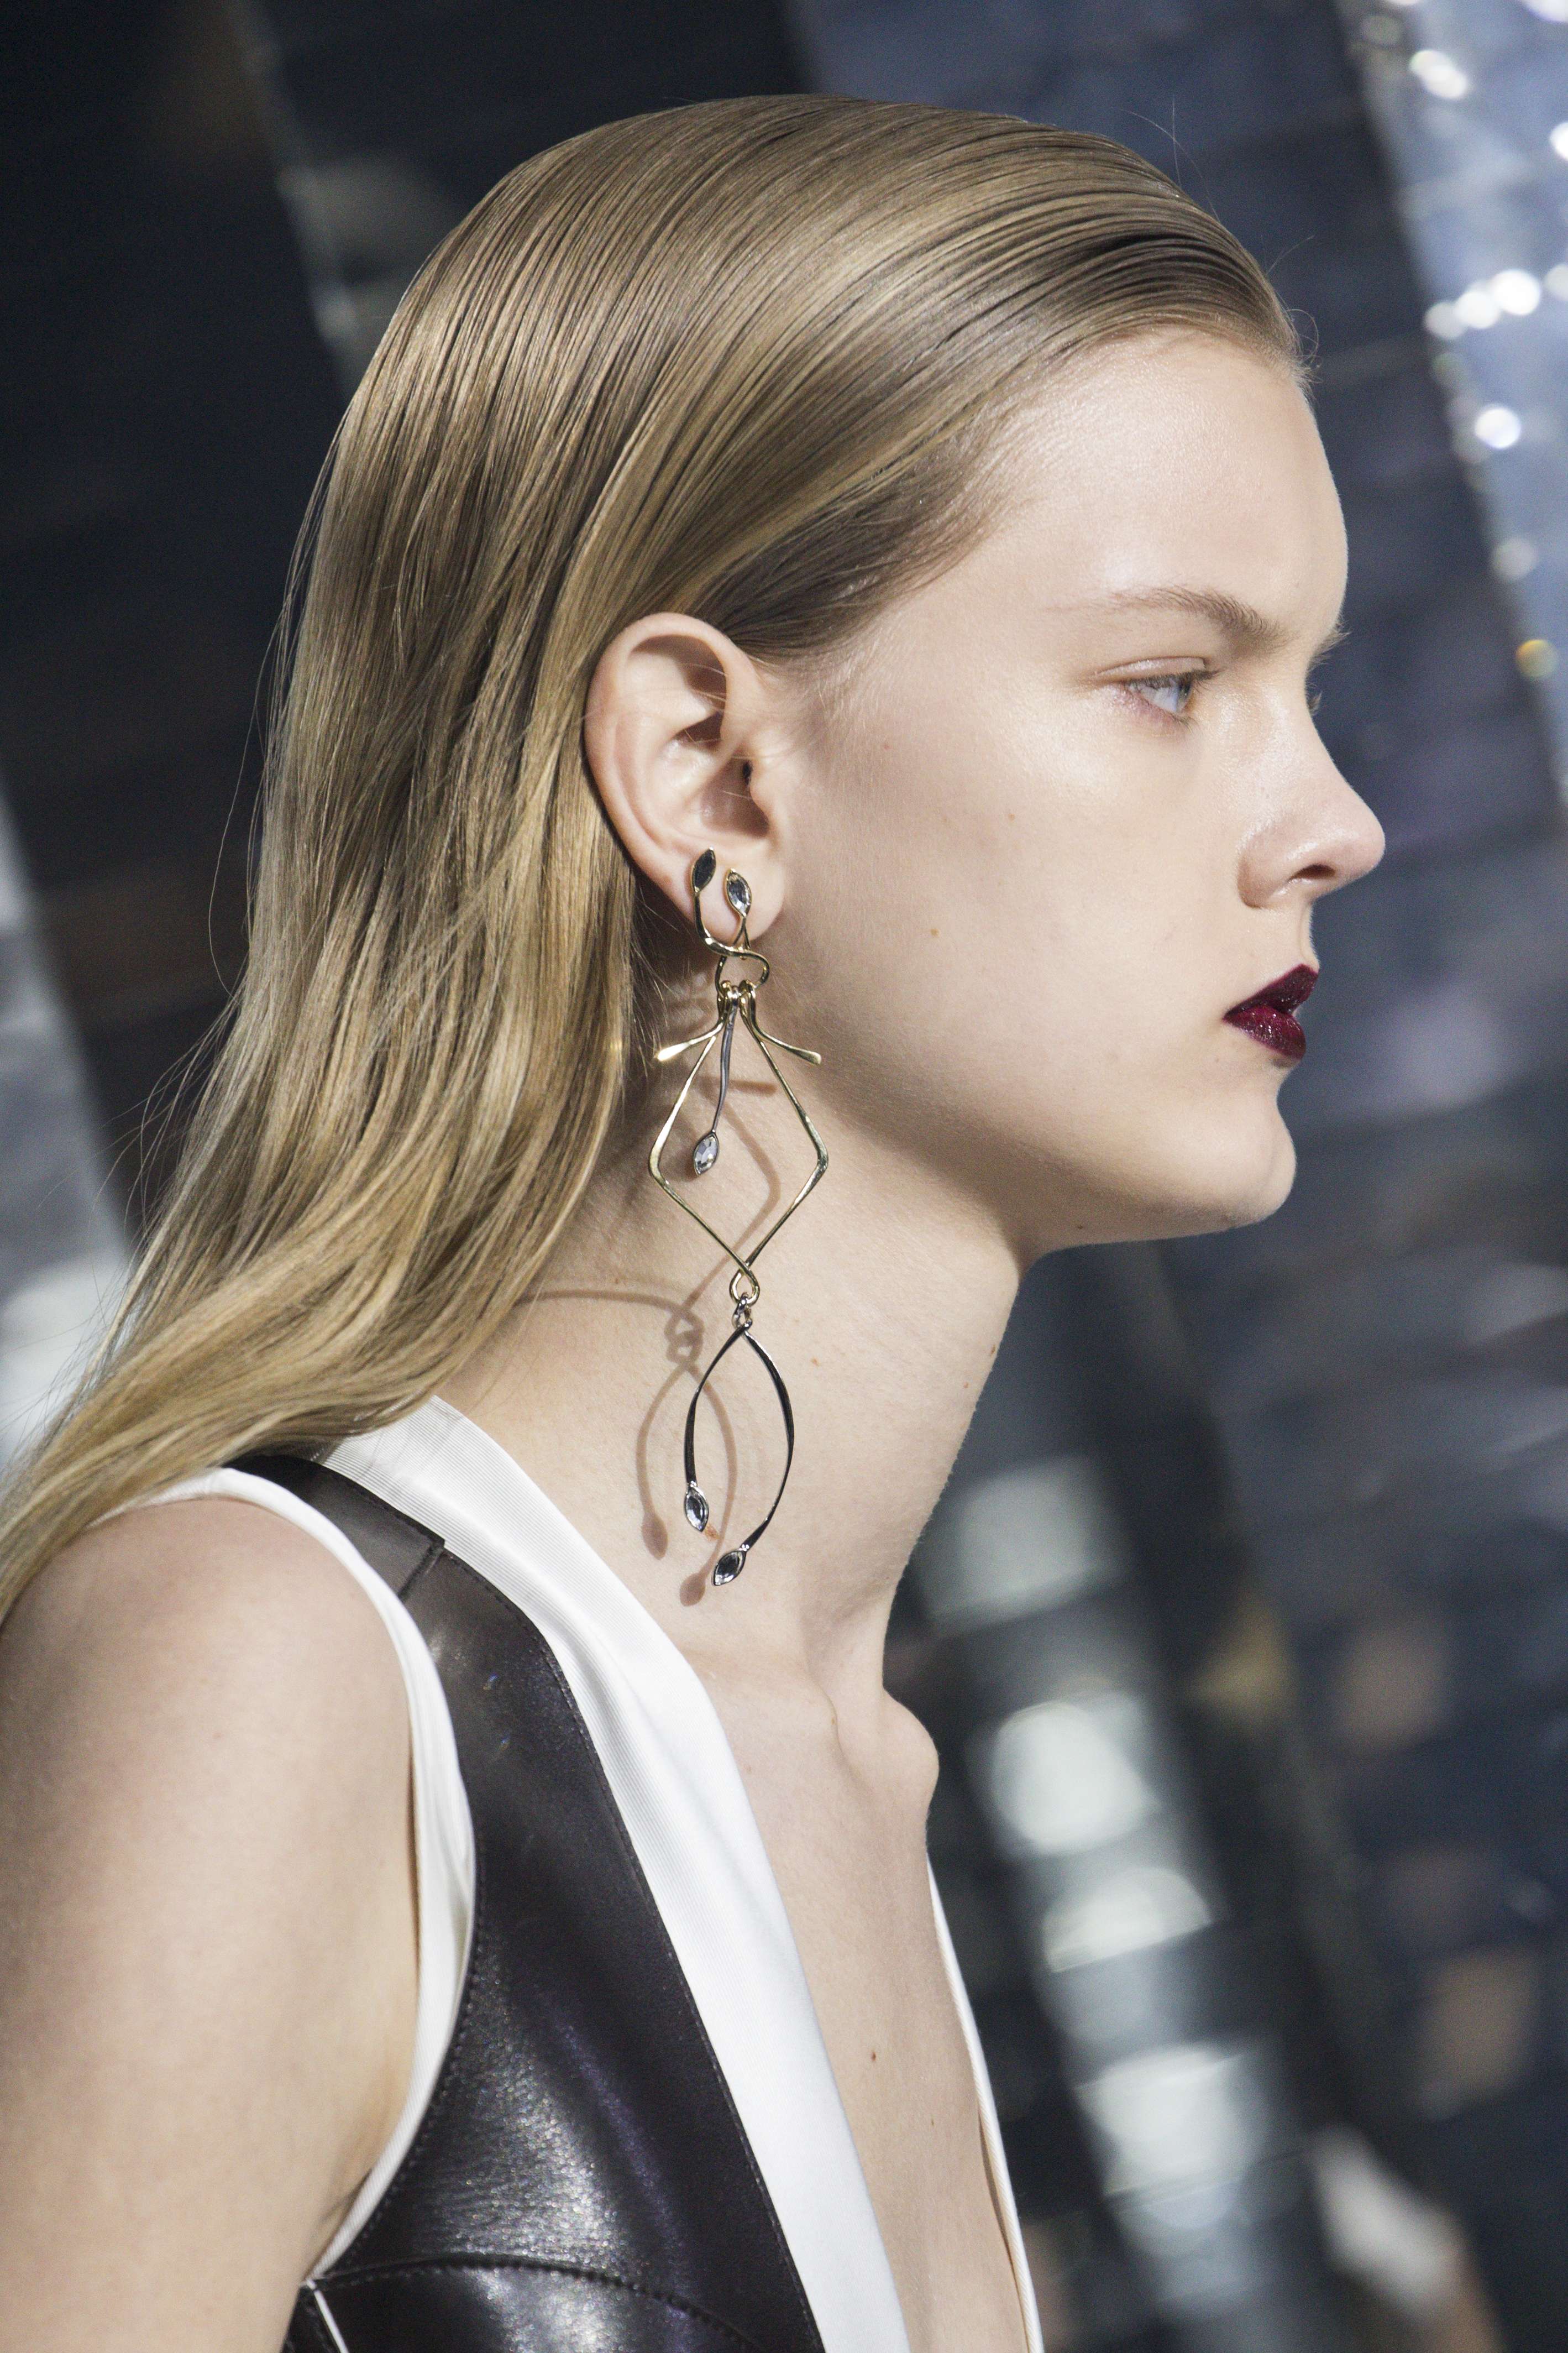 Louis Vuitton Wish Bone earrings